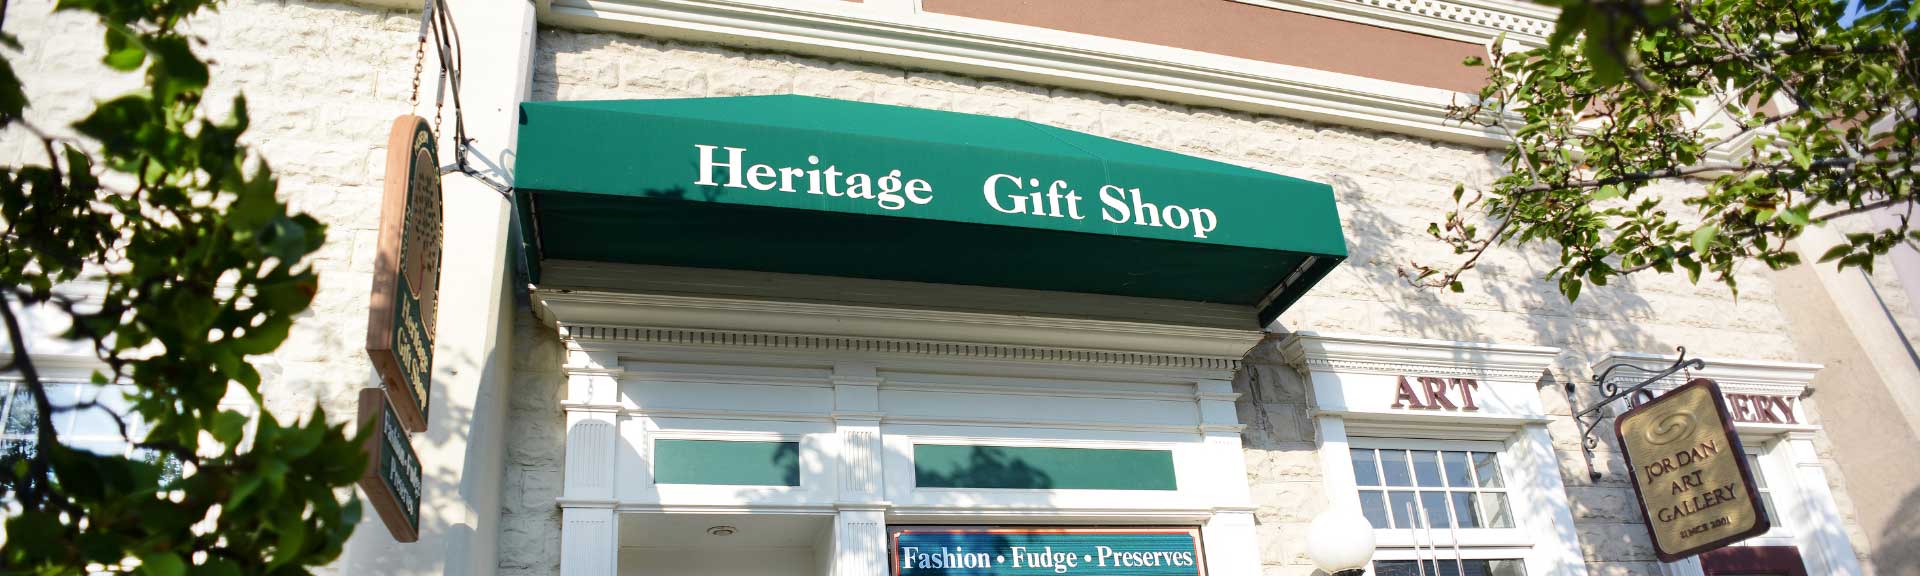 The Heritage Gift Shop Jordan Village, Ontario